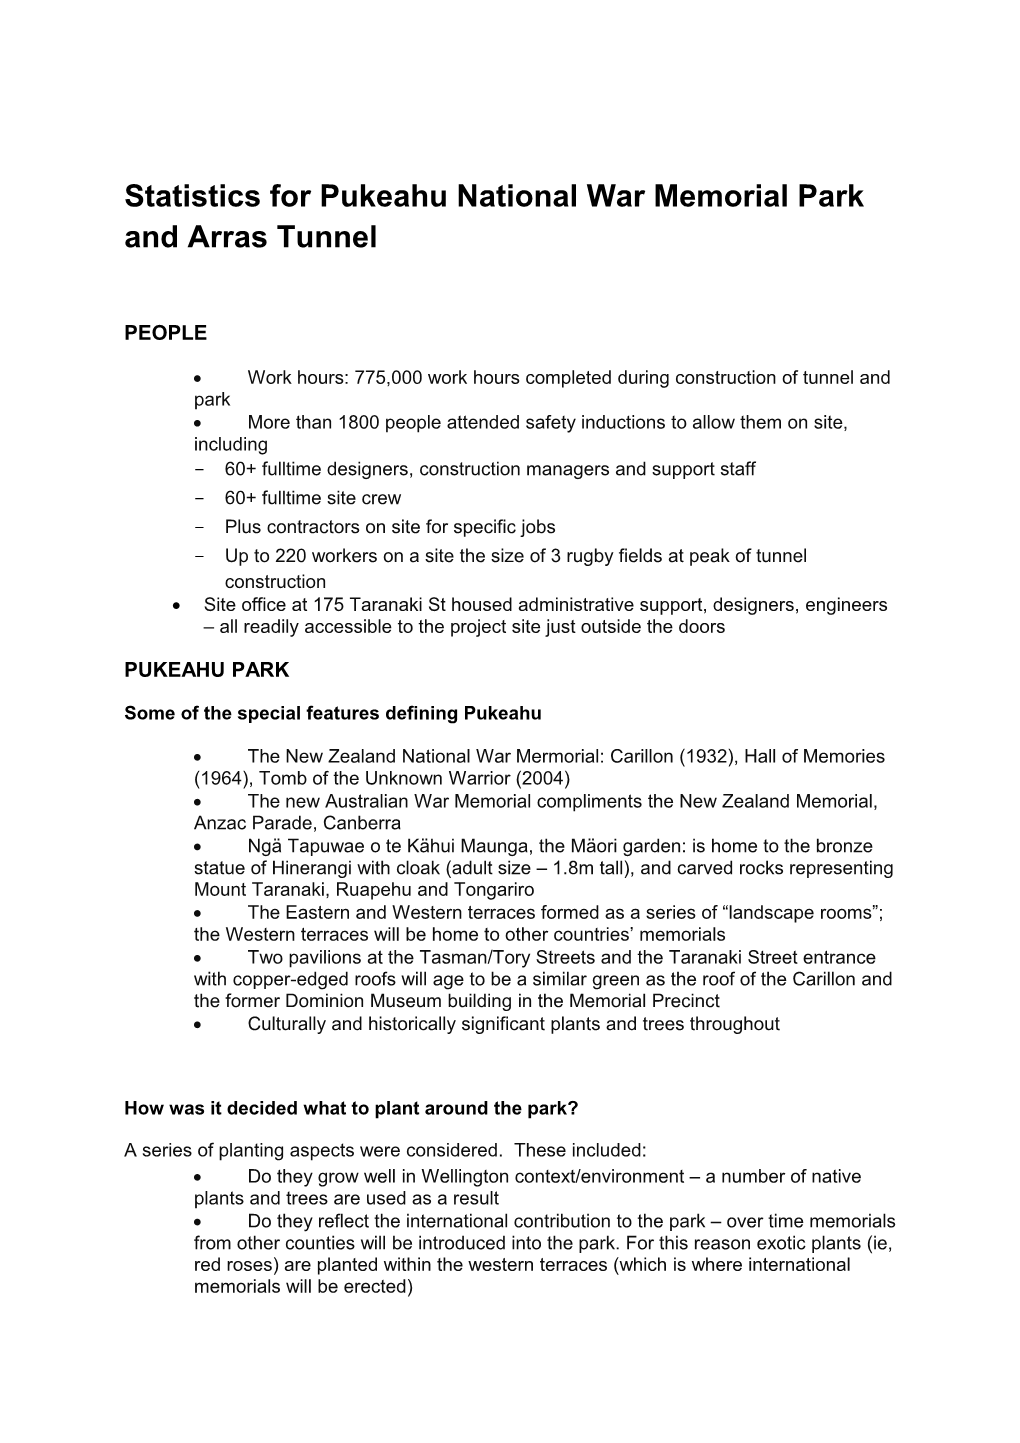 Statistics for Pukeahu National War Memorial Park Andarras Tunnel